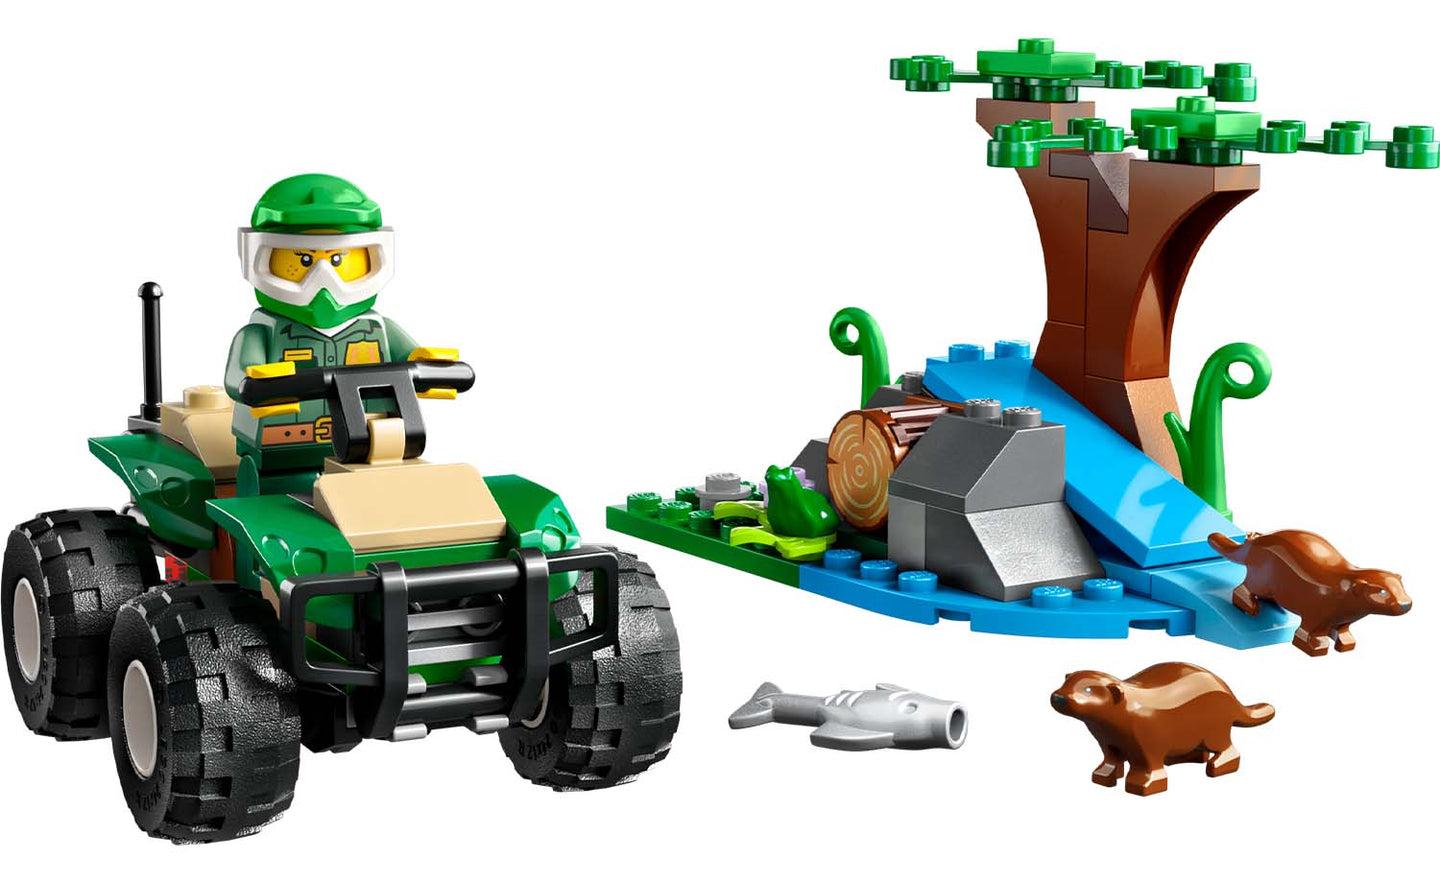 60394 | LEGO® City ATV and Otter Habitat